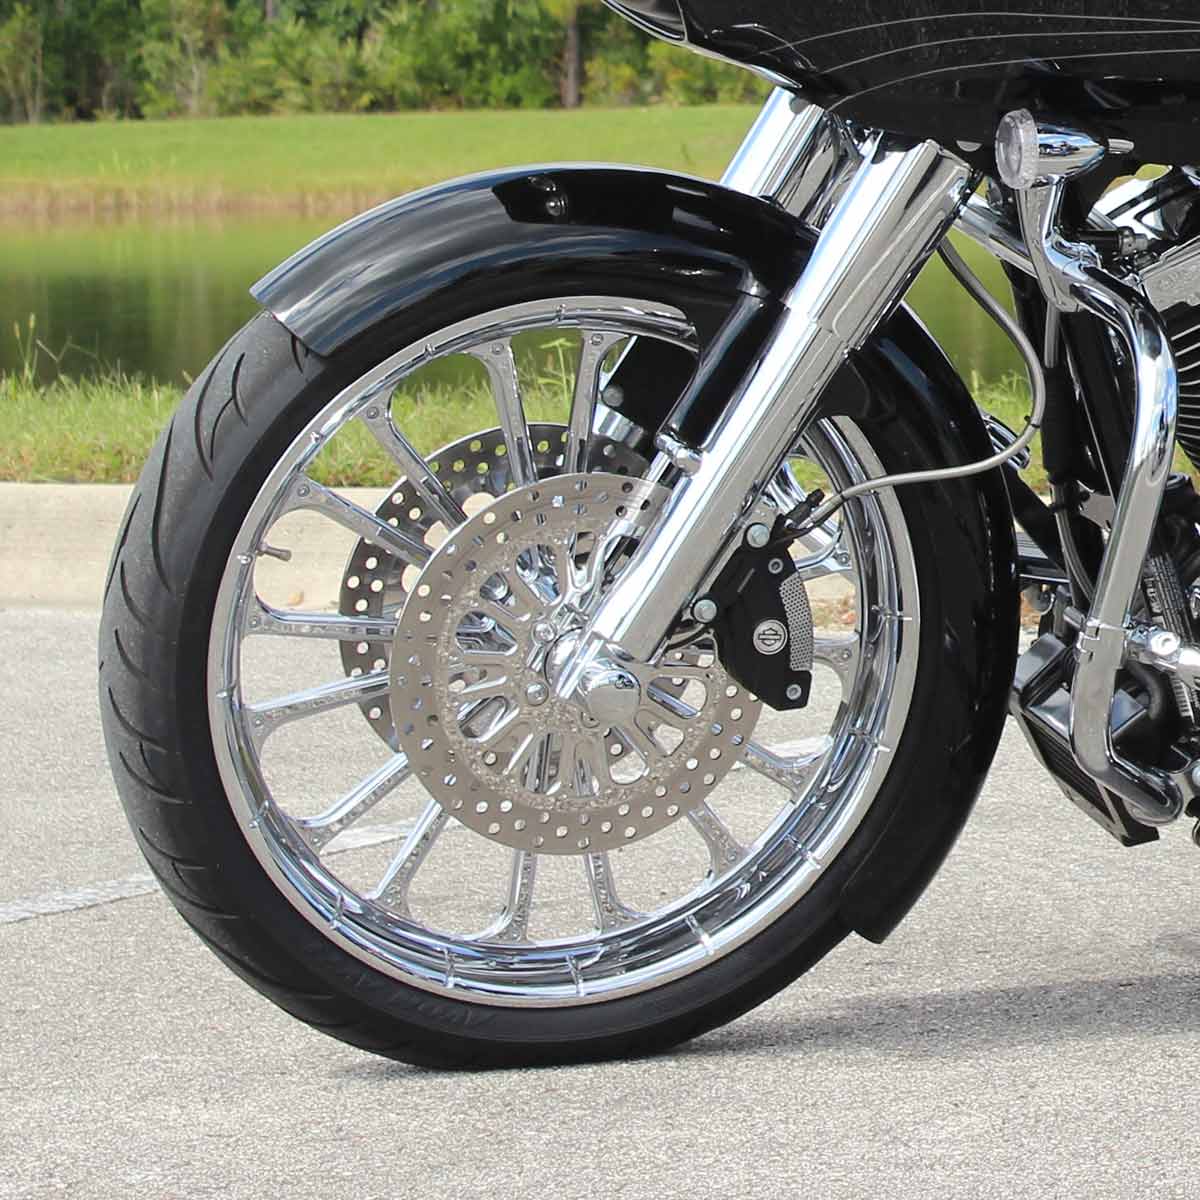 21" Wrapper Tire Hugger Front Fenders for Harley-Davidson 1983-2013 Touring Motorcycle Models